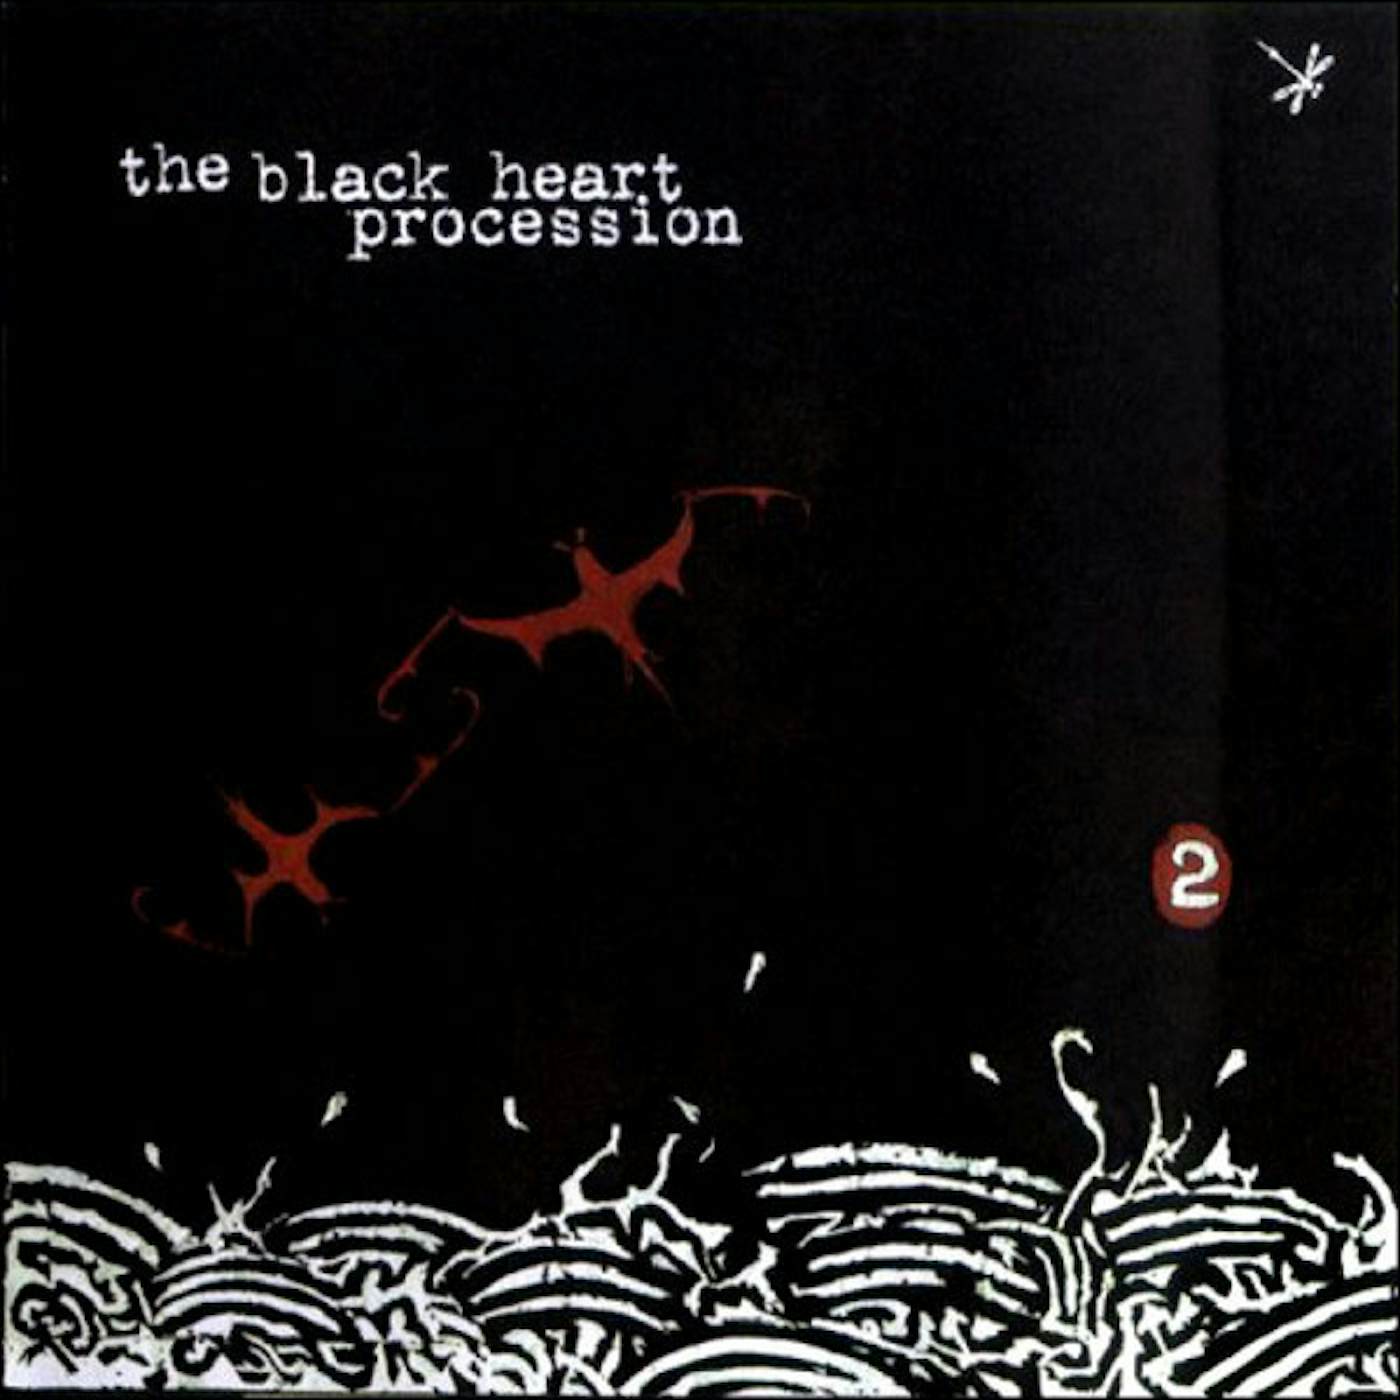  The Black Heart Procession 2 Vinyl Record